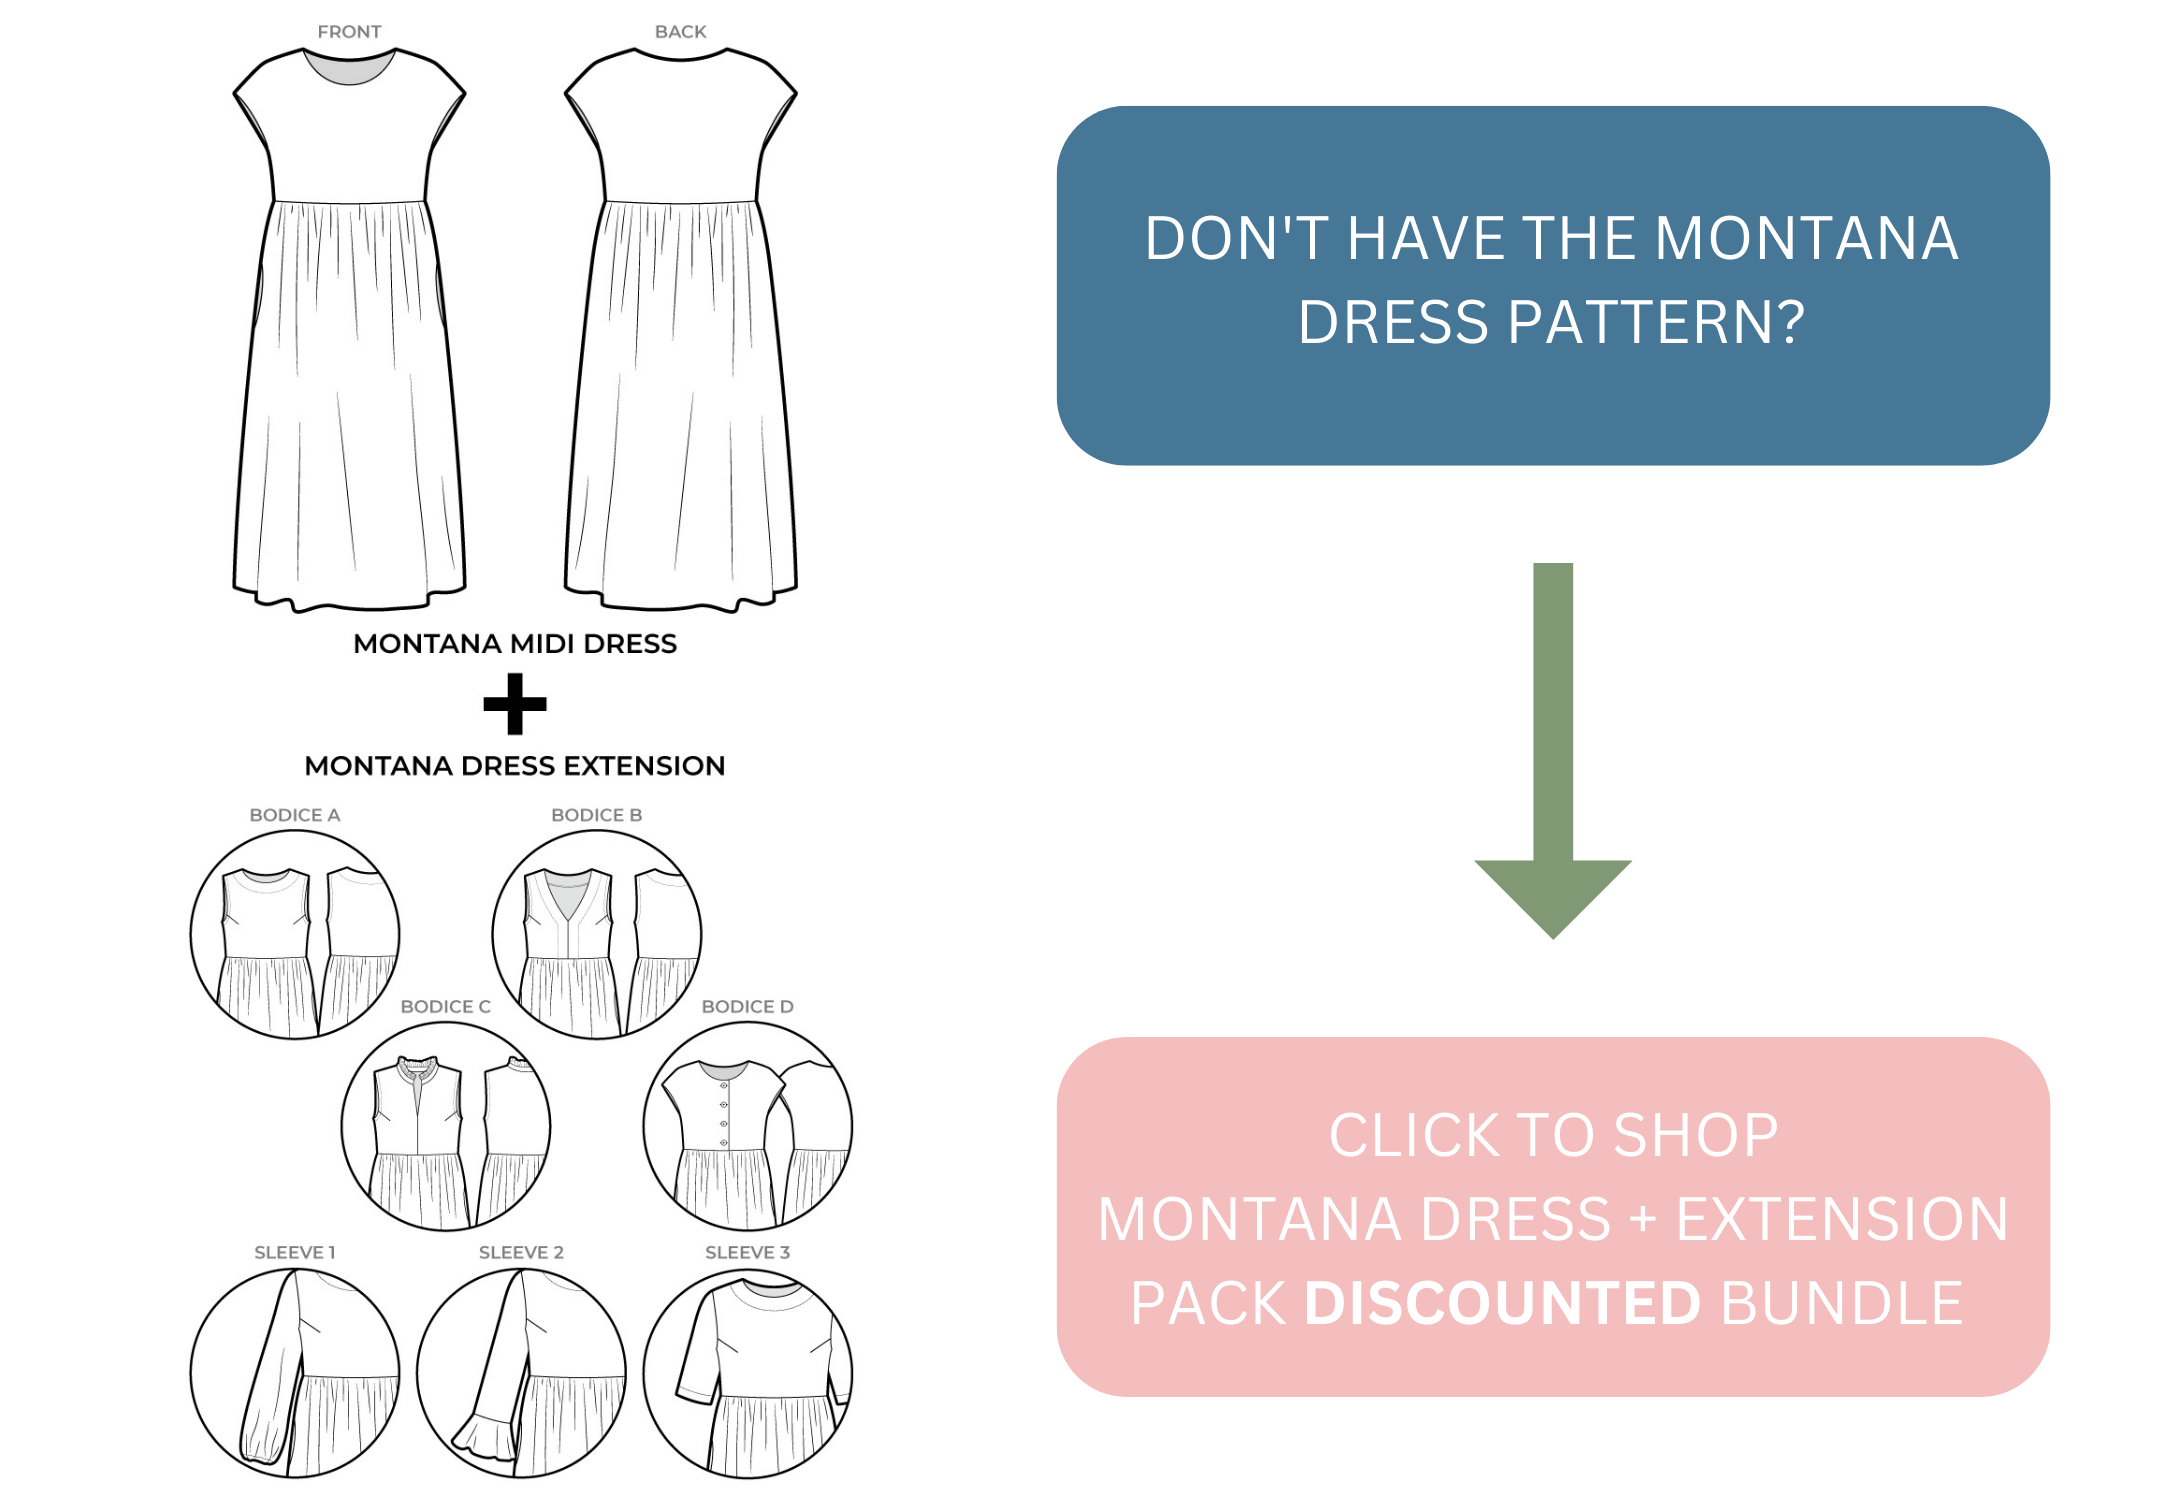 Montana Dress + Extension Pack Bundle Link